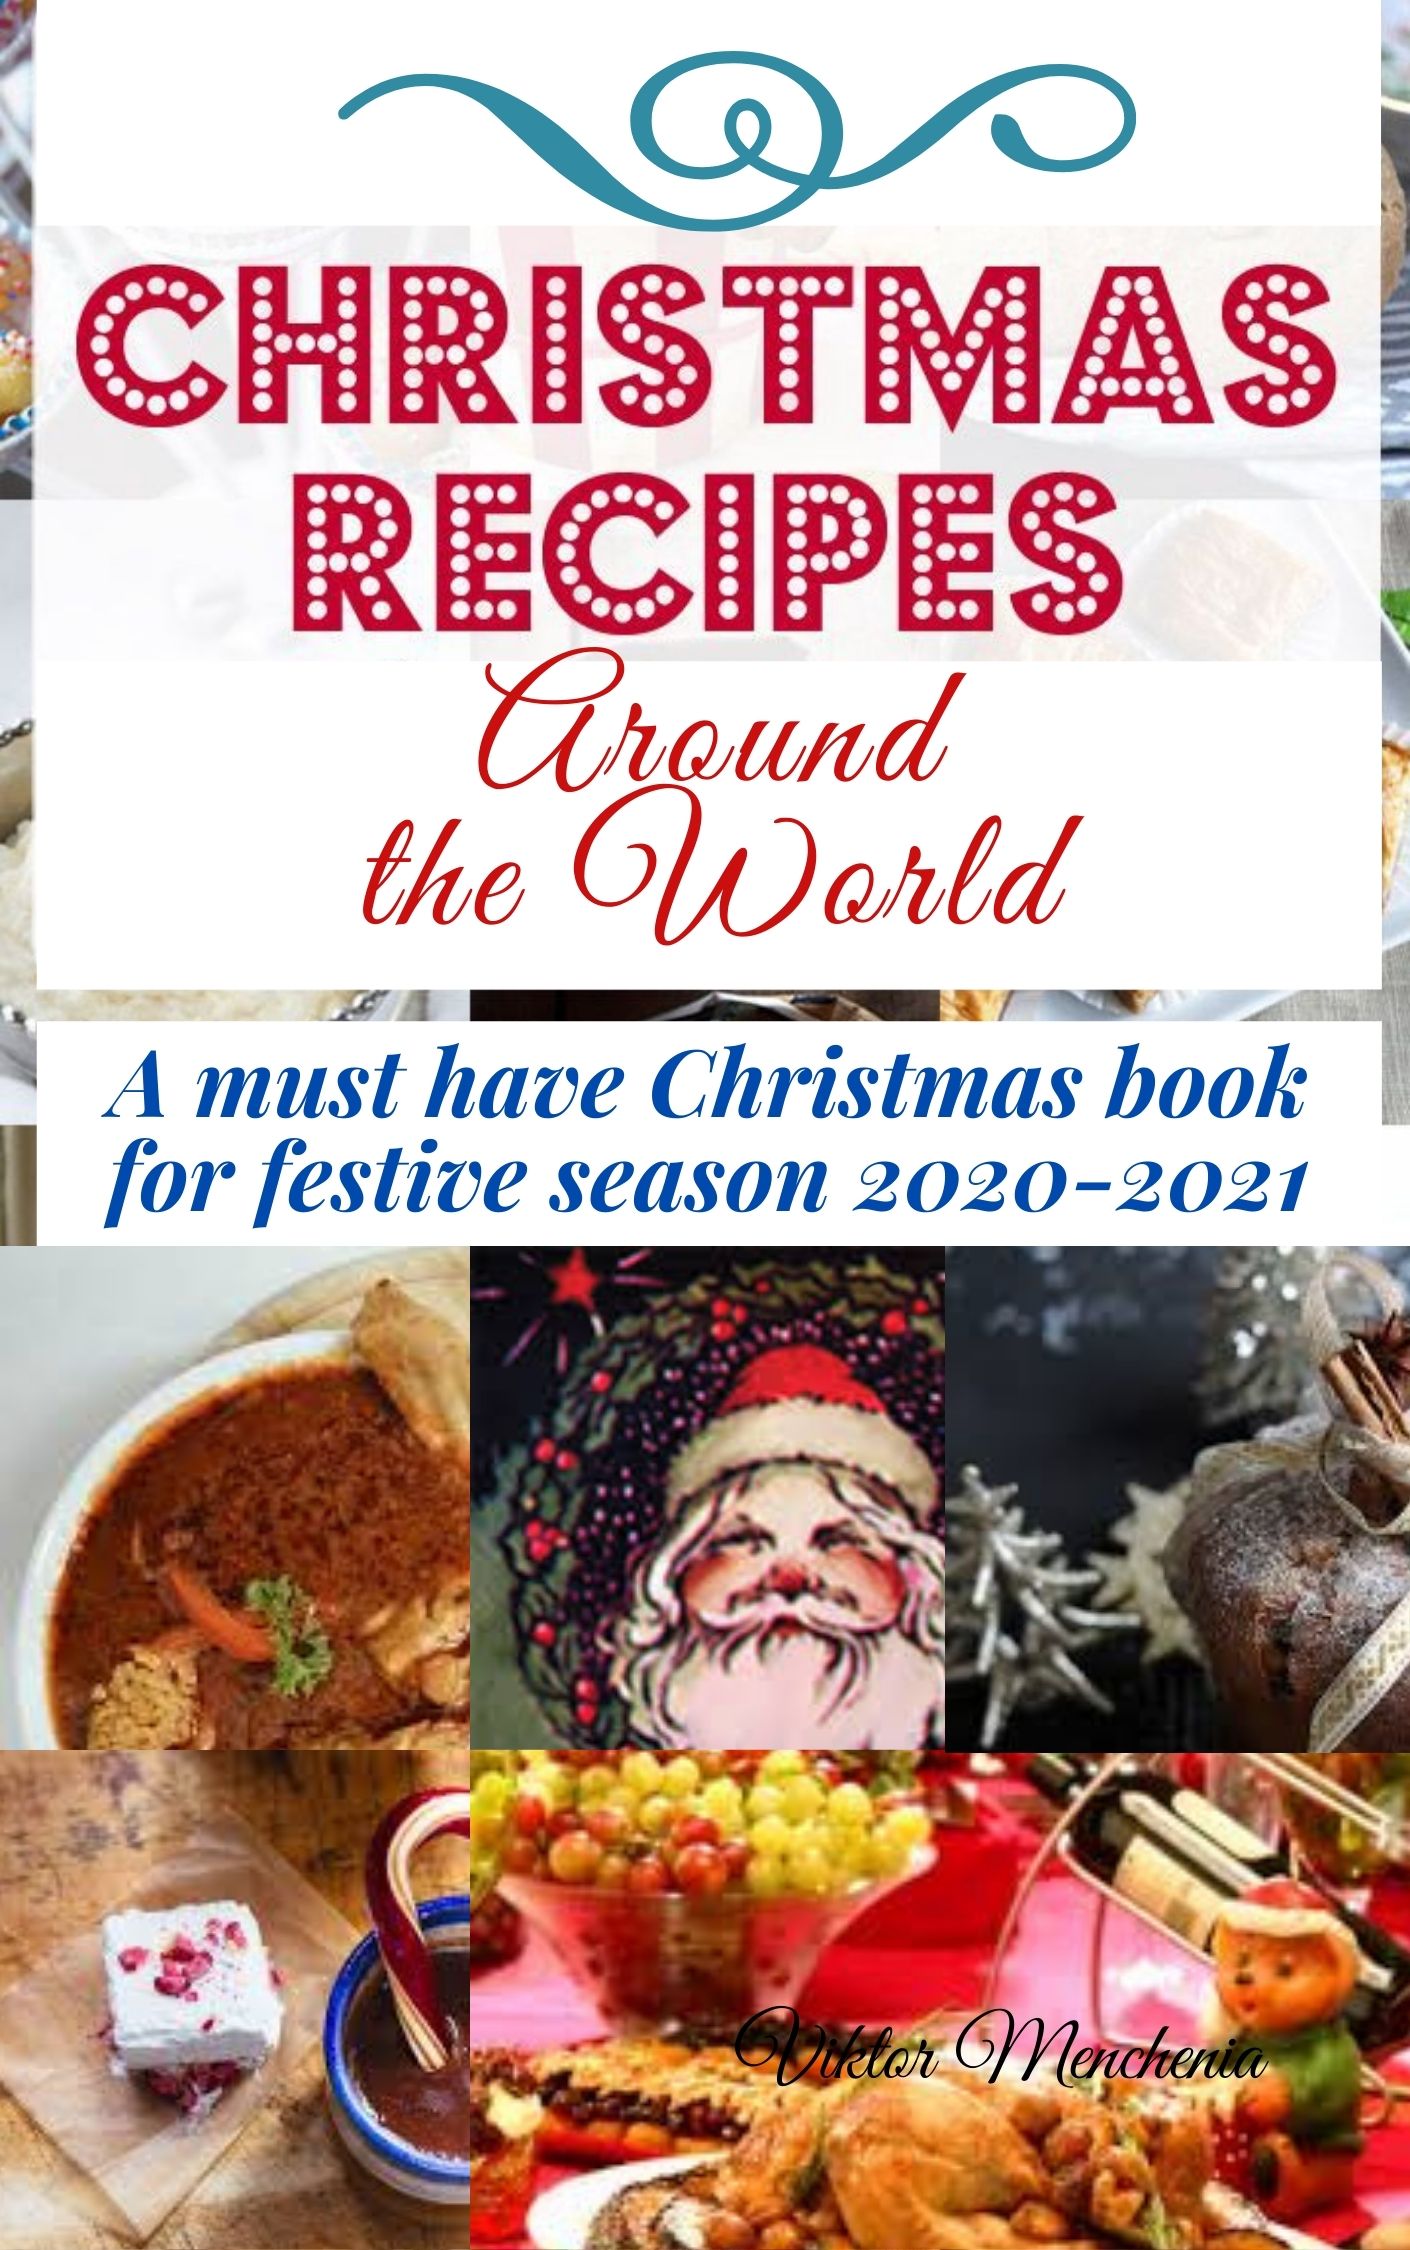 FREE: Christmas Recipes Around the World by Viktor Menchenia